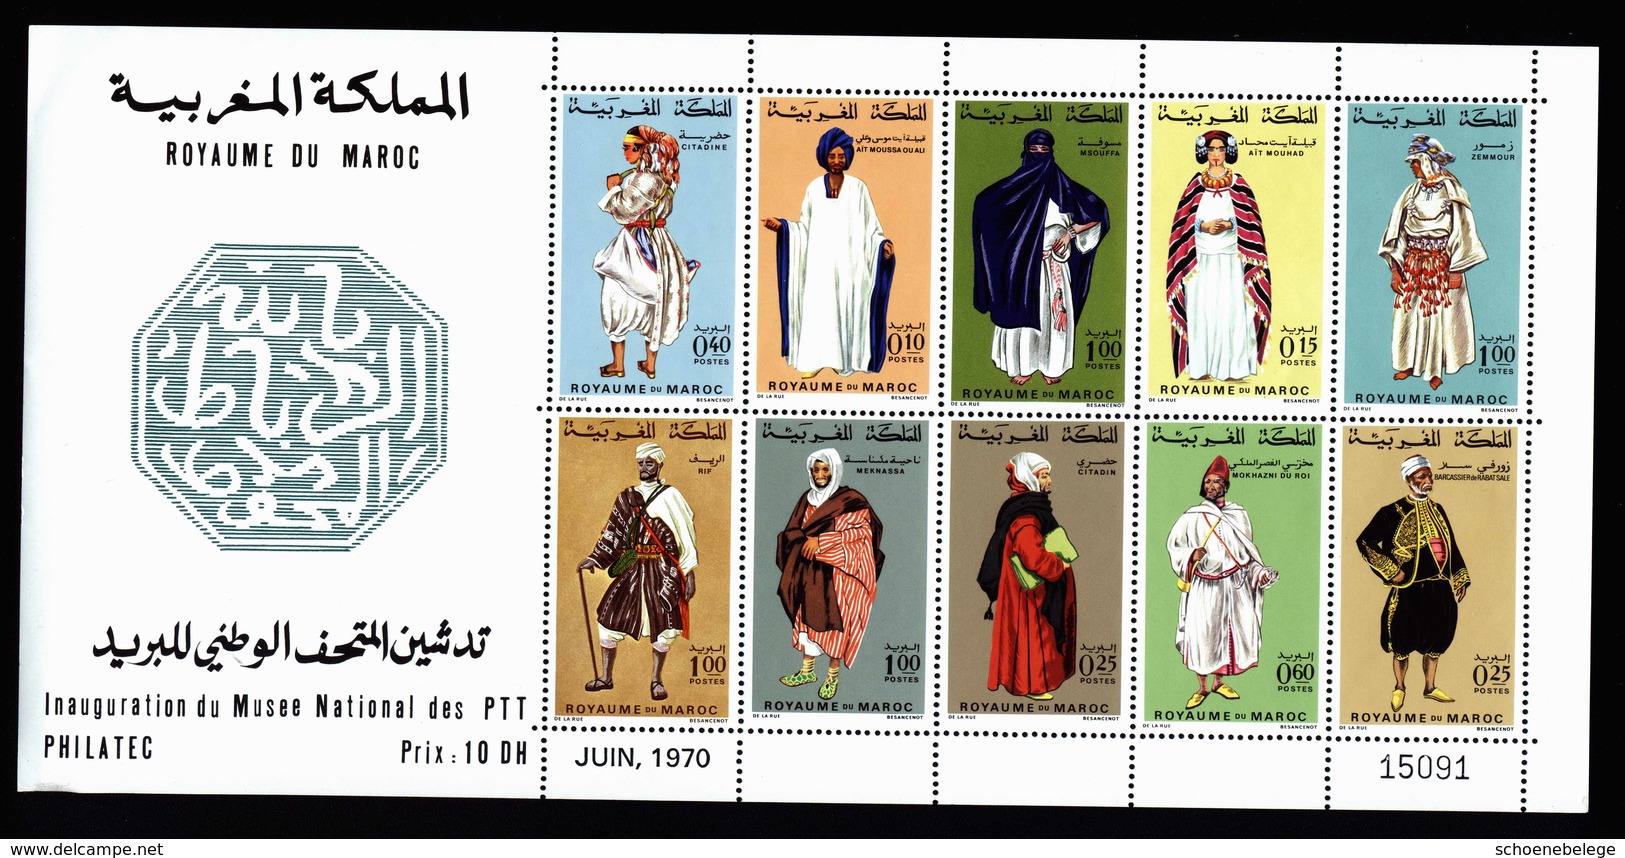 A5968) Marokko Maroc Souvenir Sheet With Enveloppe PHILATEC 1970 - Marokko (1956-...)